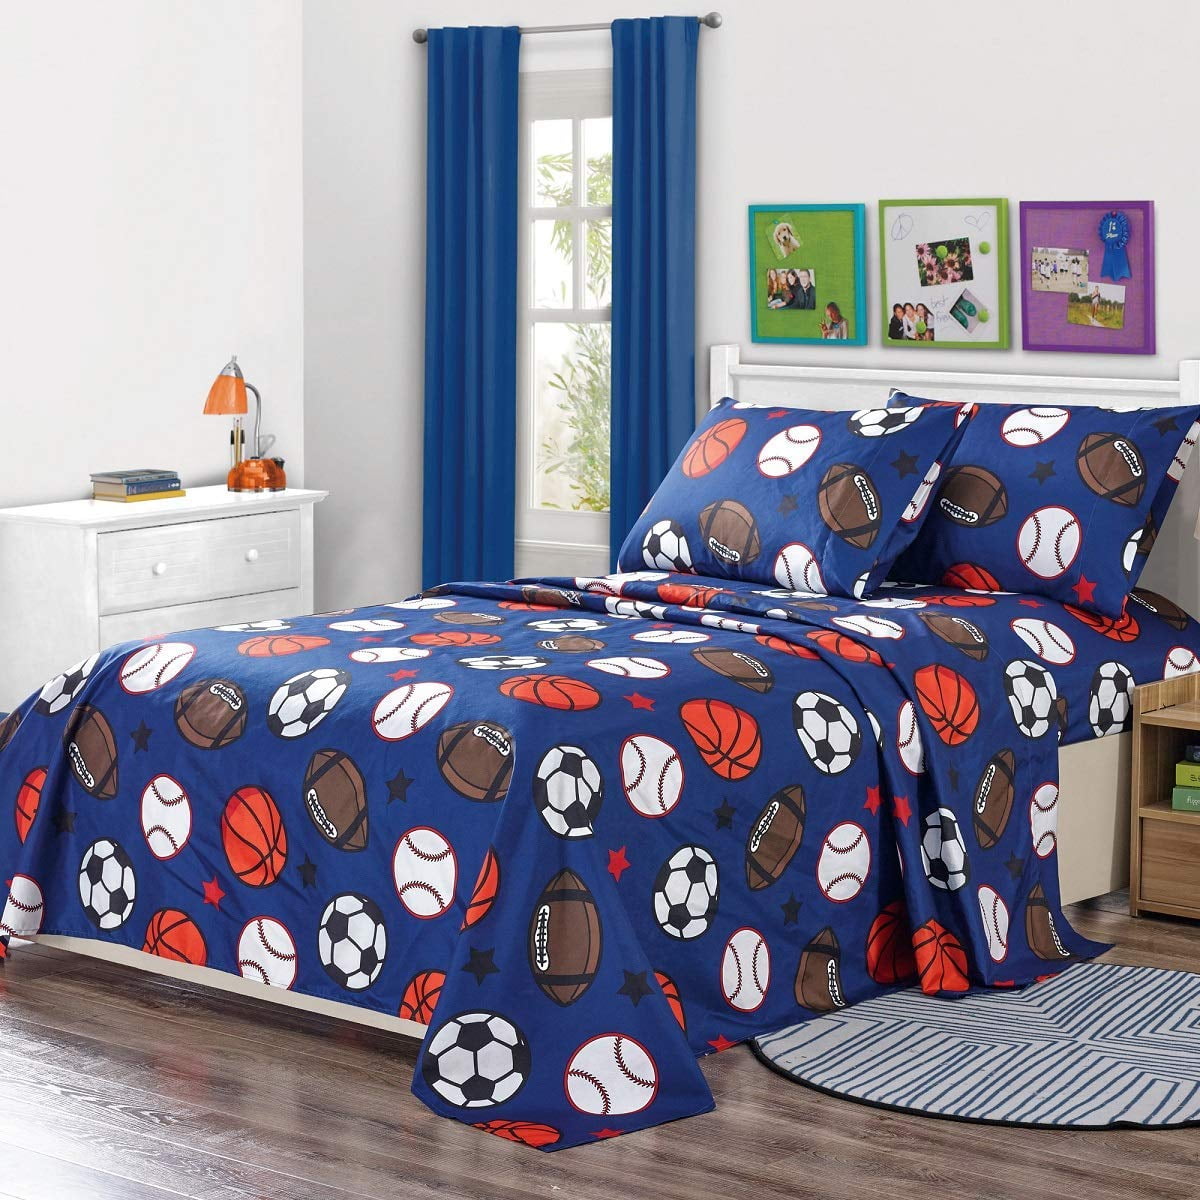 Wpm Kids Collection Bedding 4 Piece Blue Full Size Sheet Set Flat